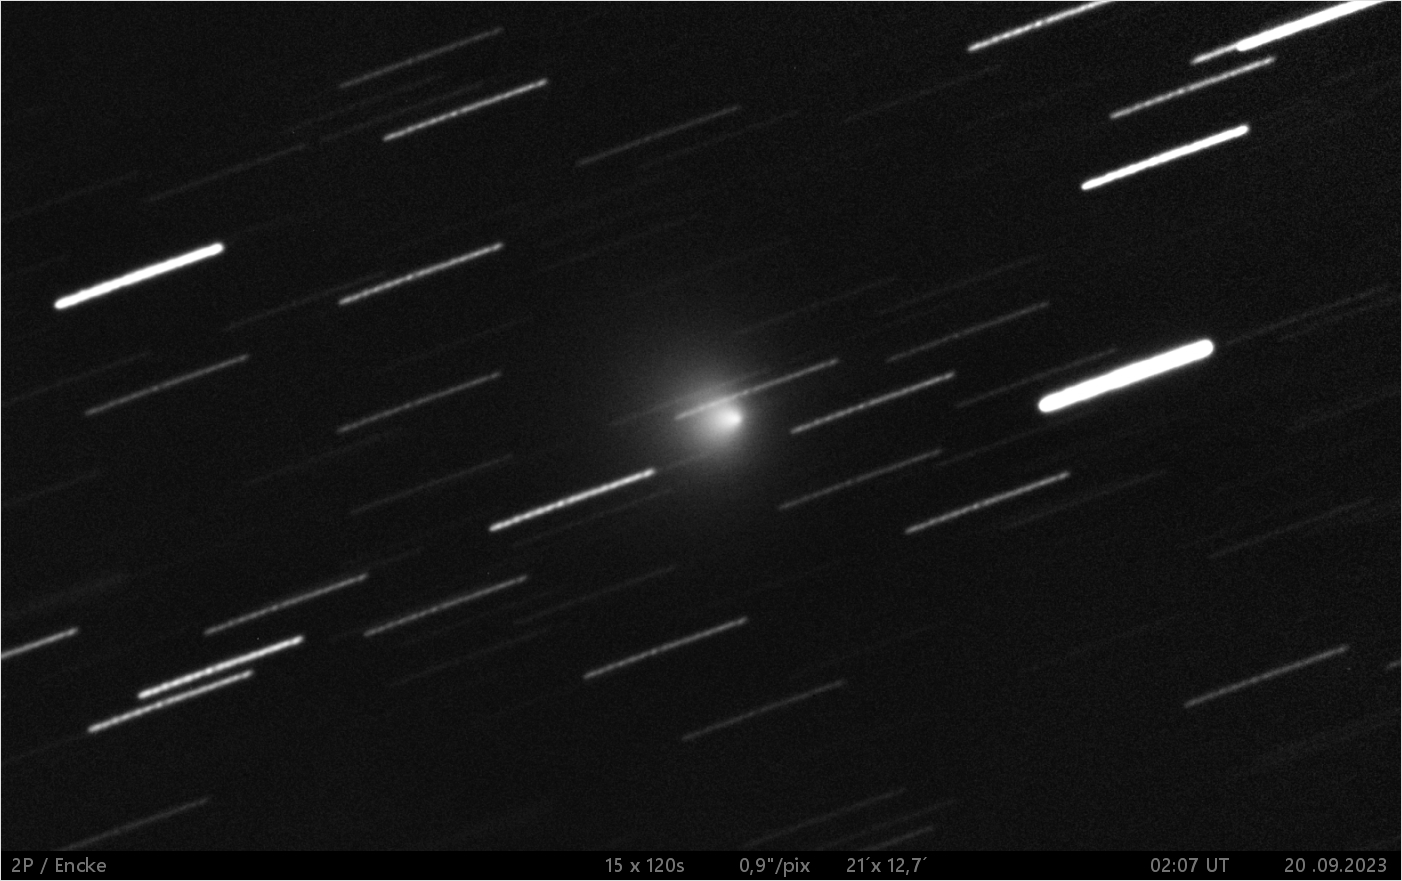 kometa 2P/Encke